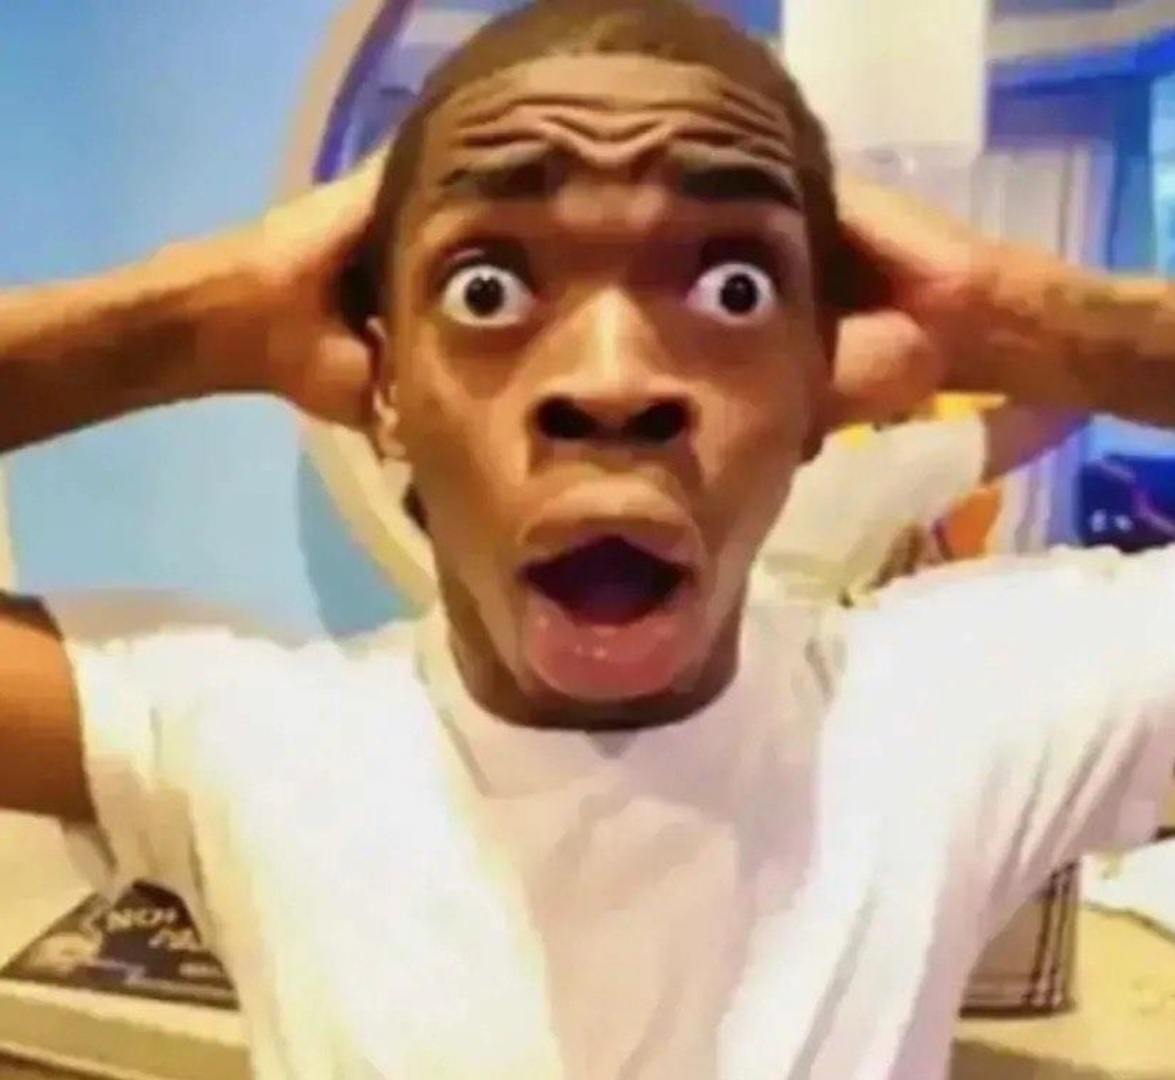 Shocked black guy grabbing head Meme Generator - Imgflip